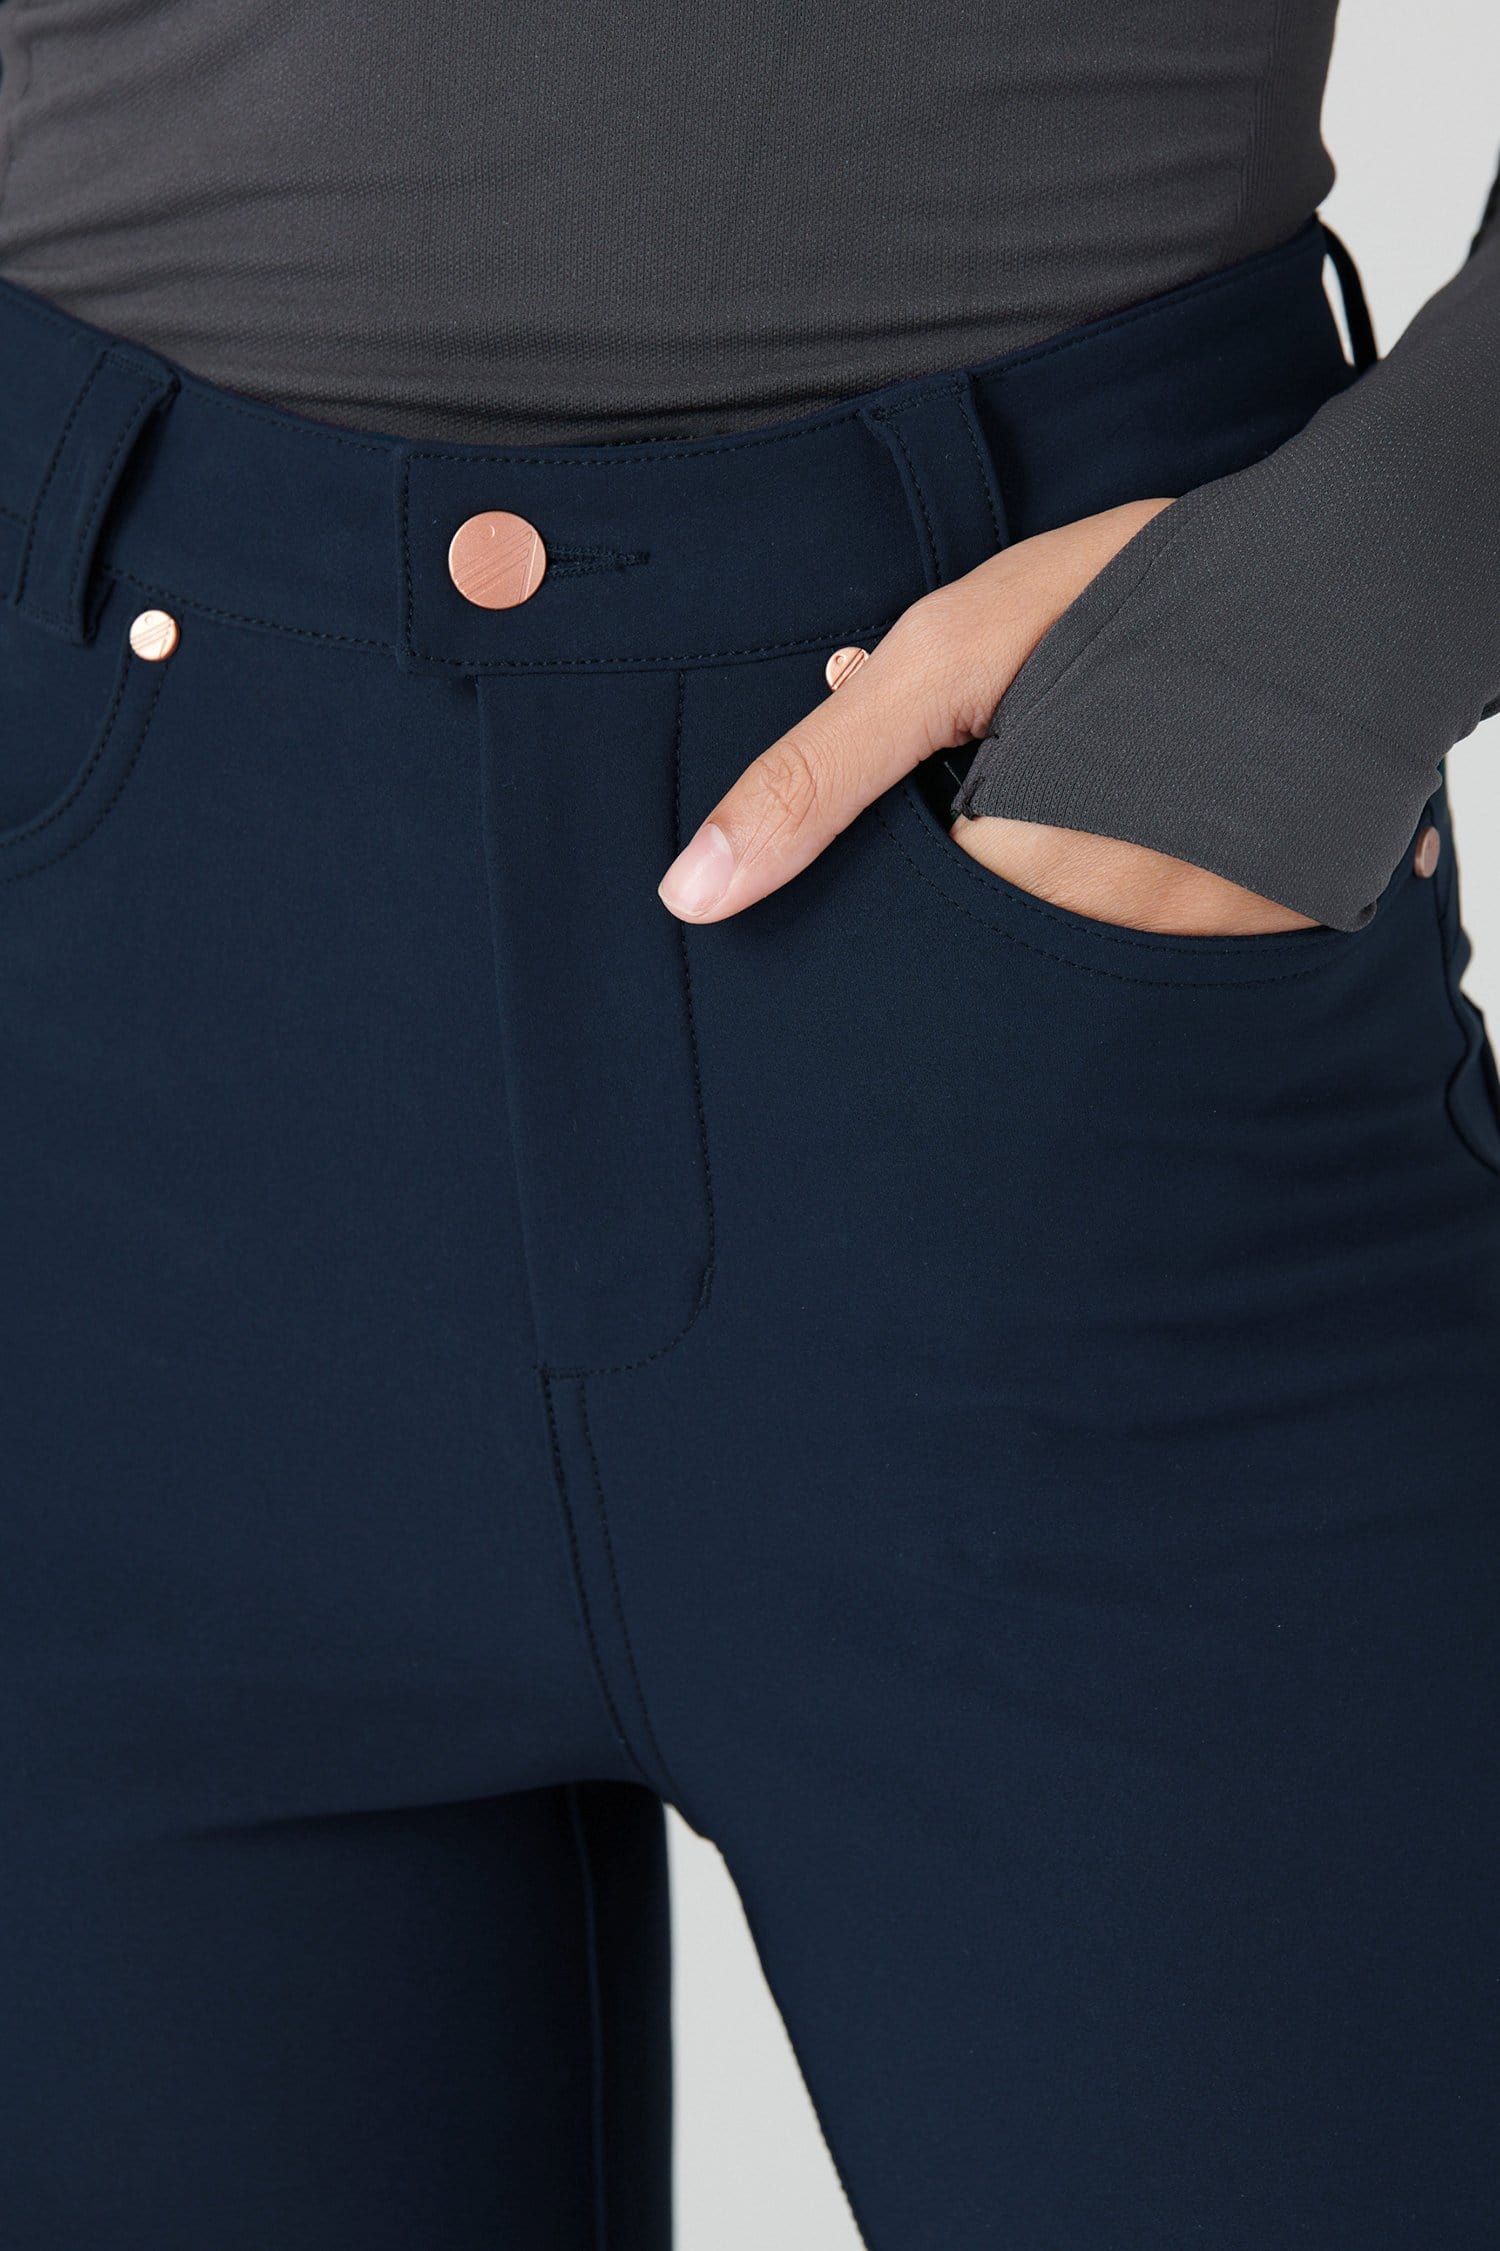 Girls Skinny Trousers School Navy Black Women Work Office Day Stretch Tight  Fit | eBay